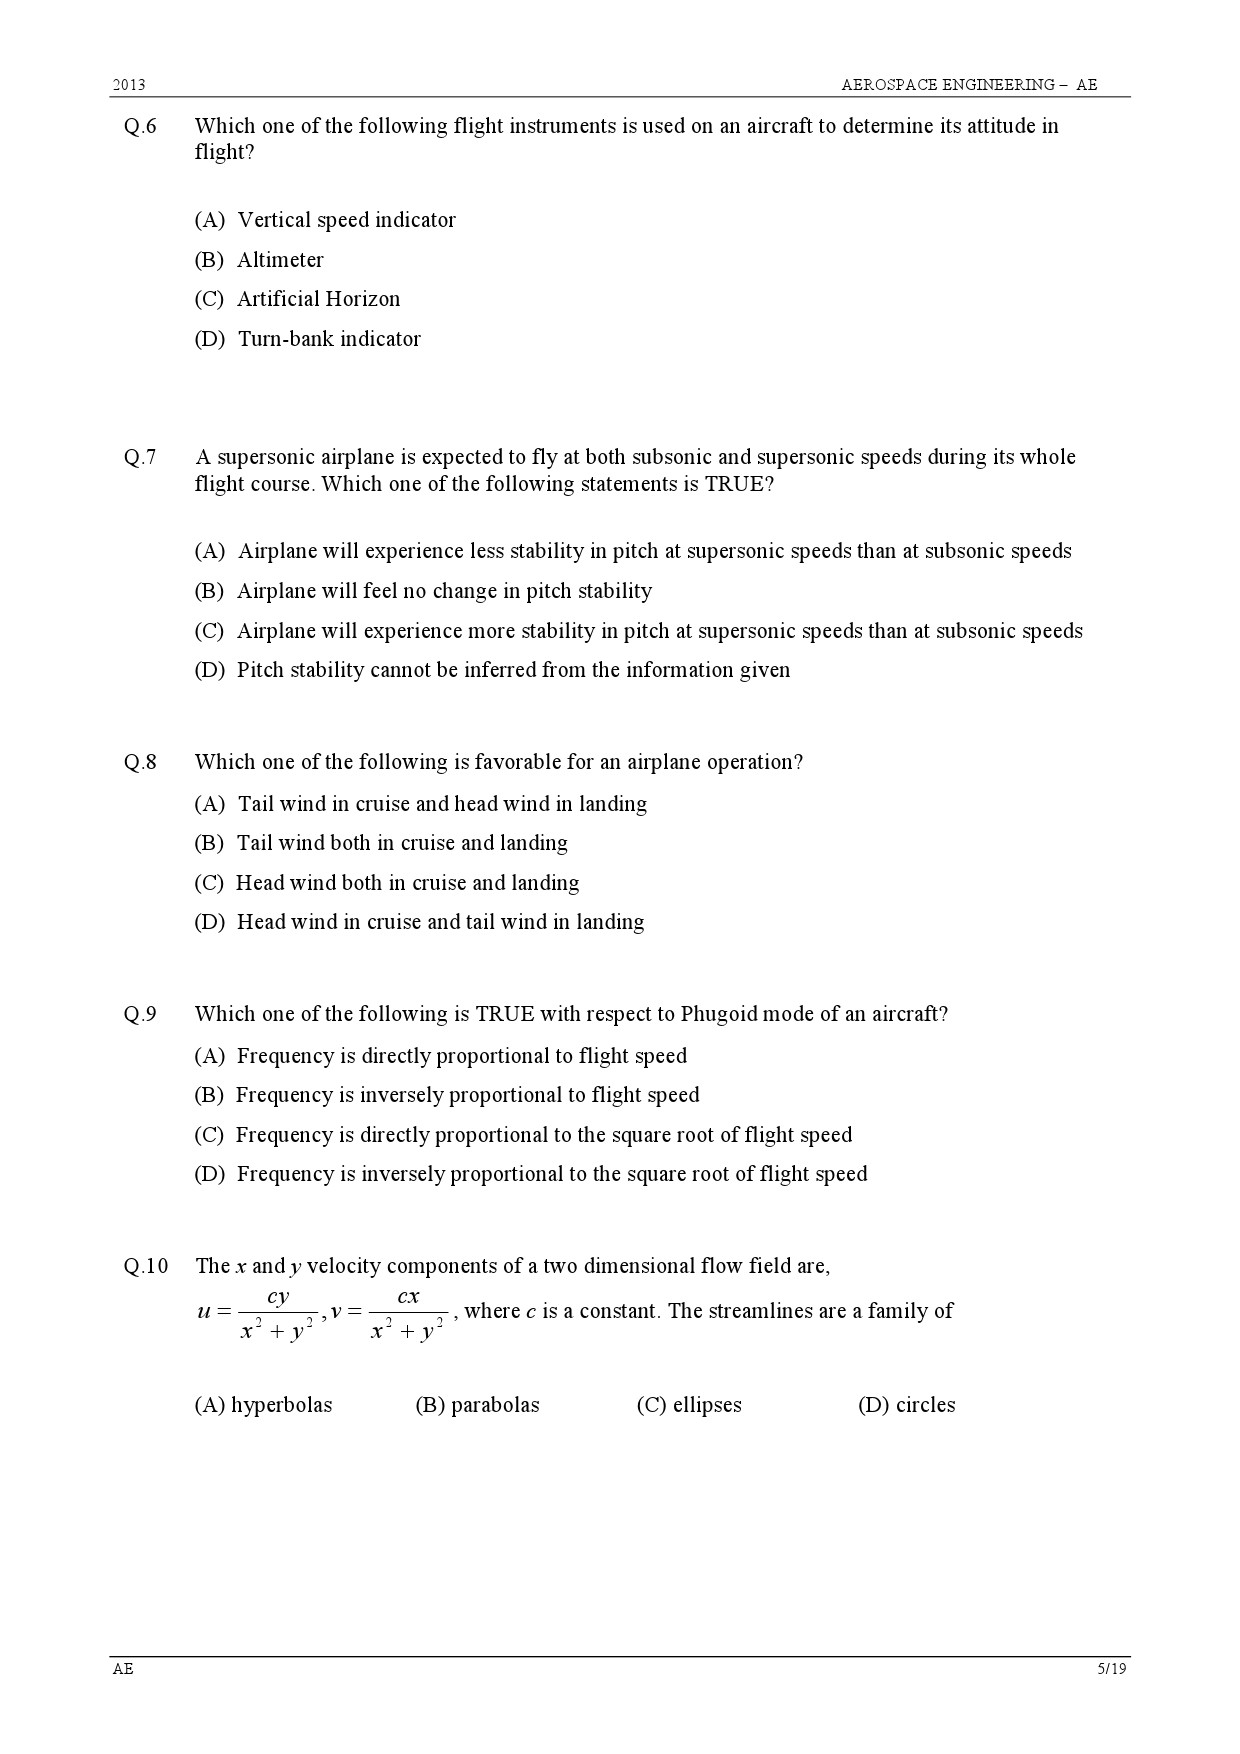 GATE Exam 2013 Aerospace Engineering Question Paper 5